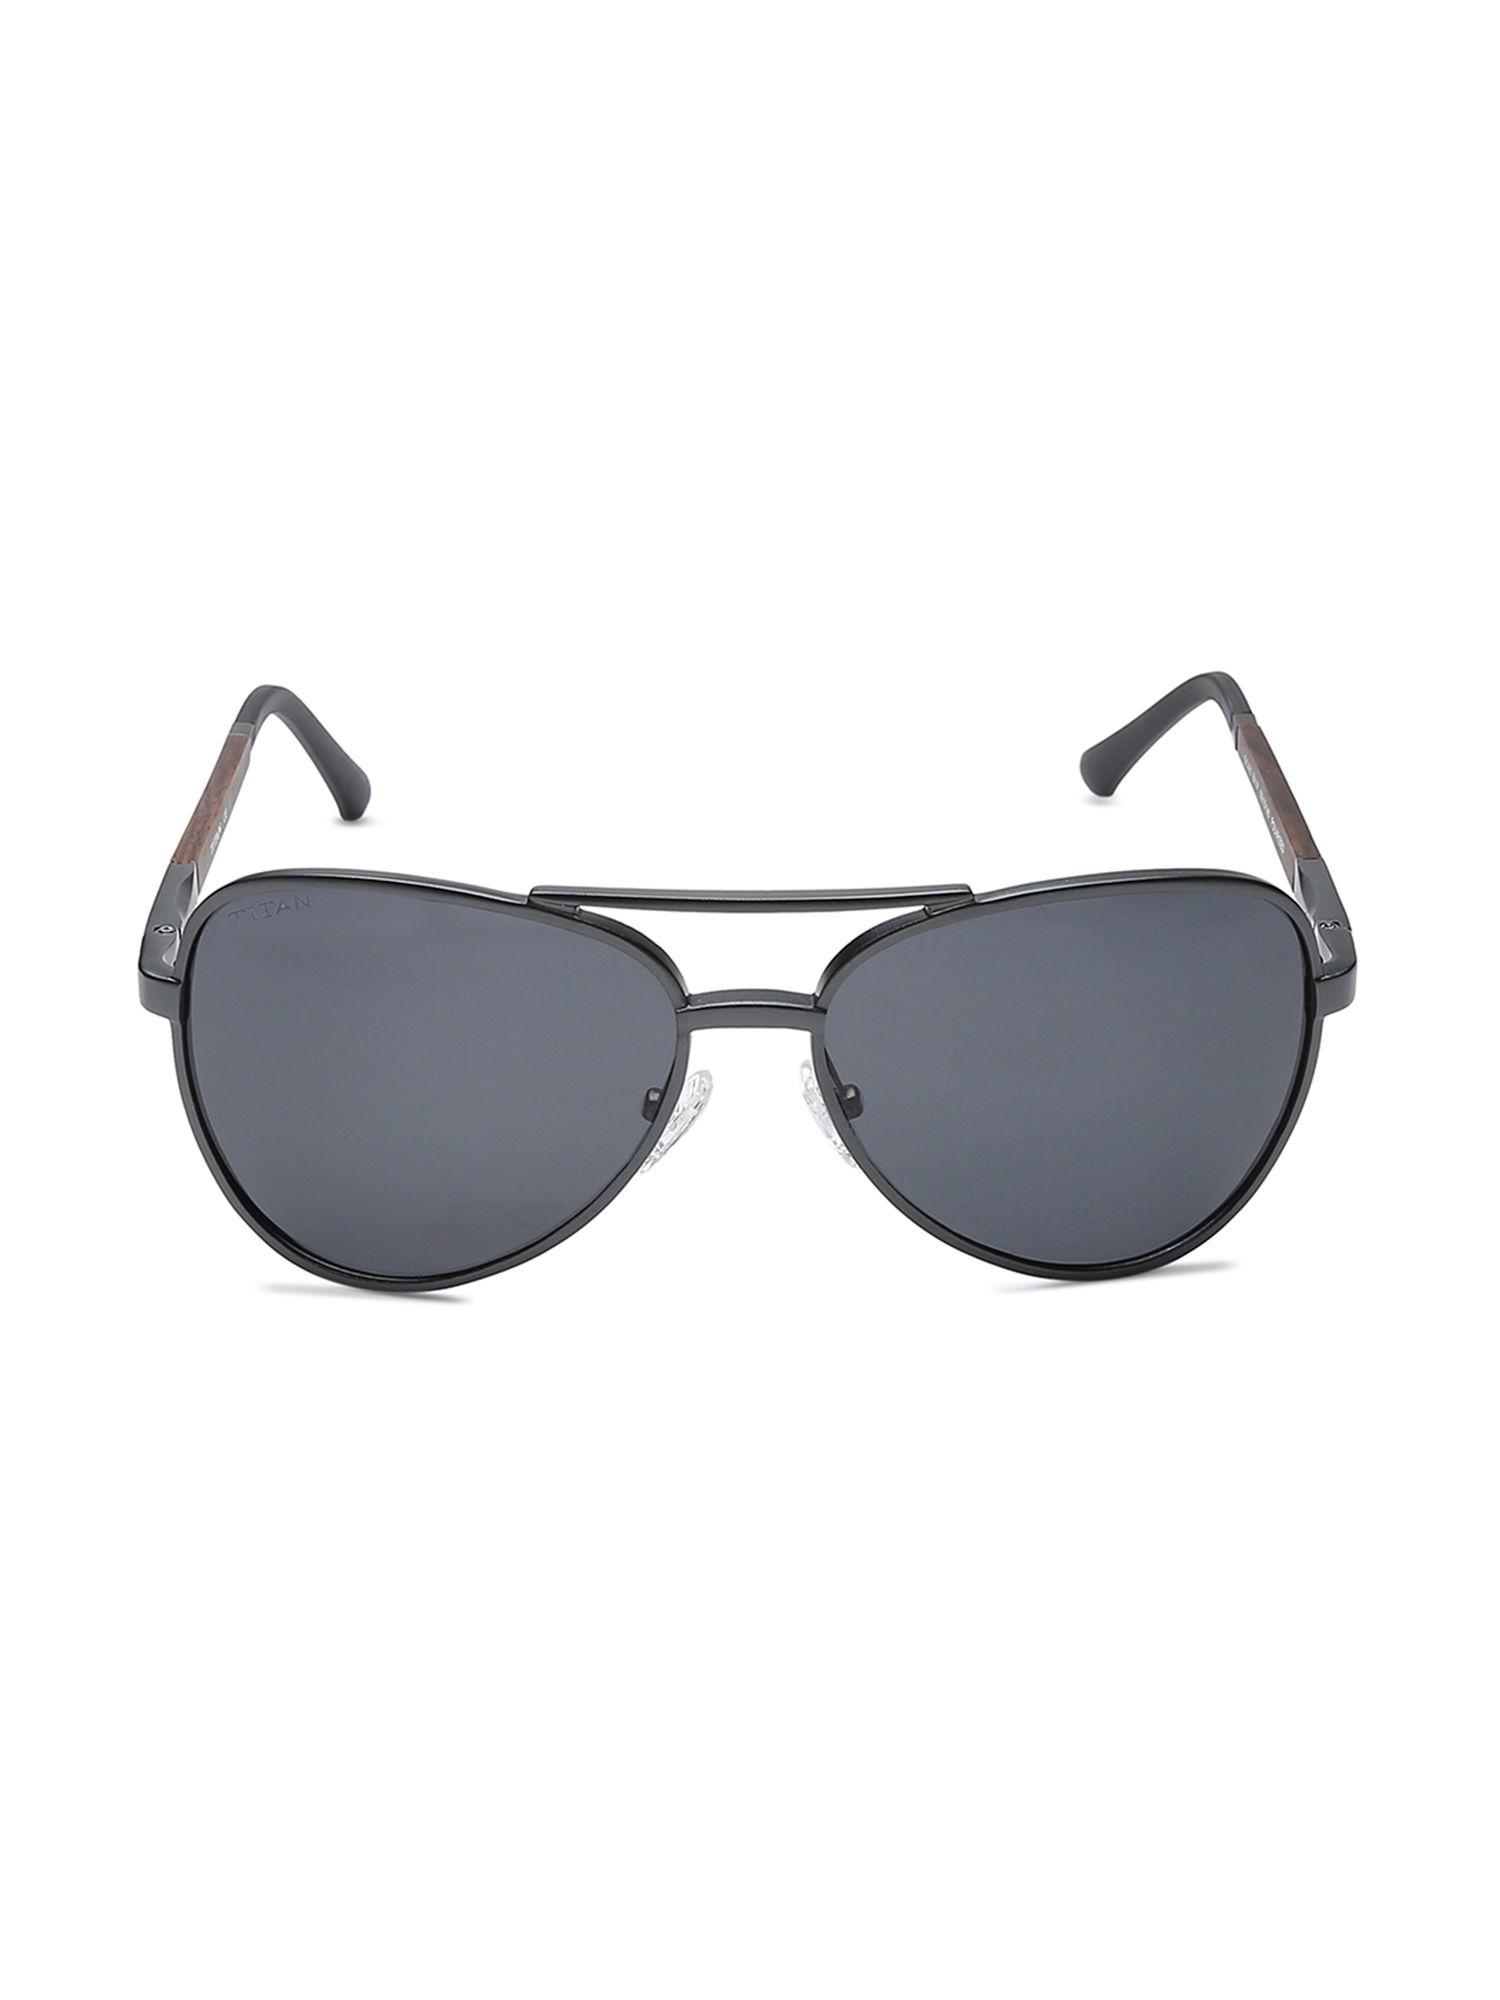 grey aviator sunglasses (gc360bk1pv)